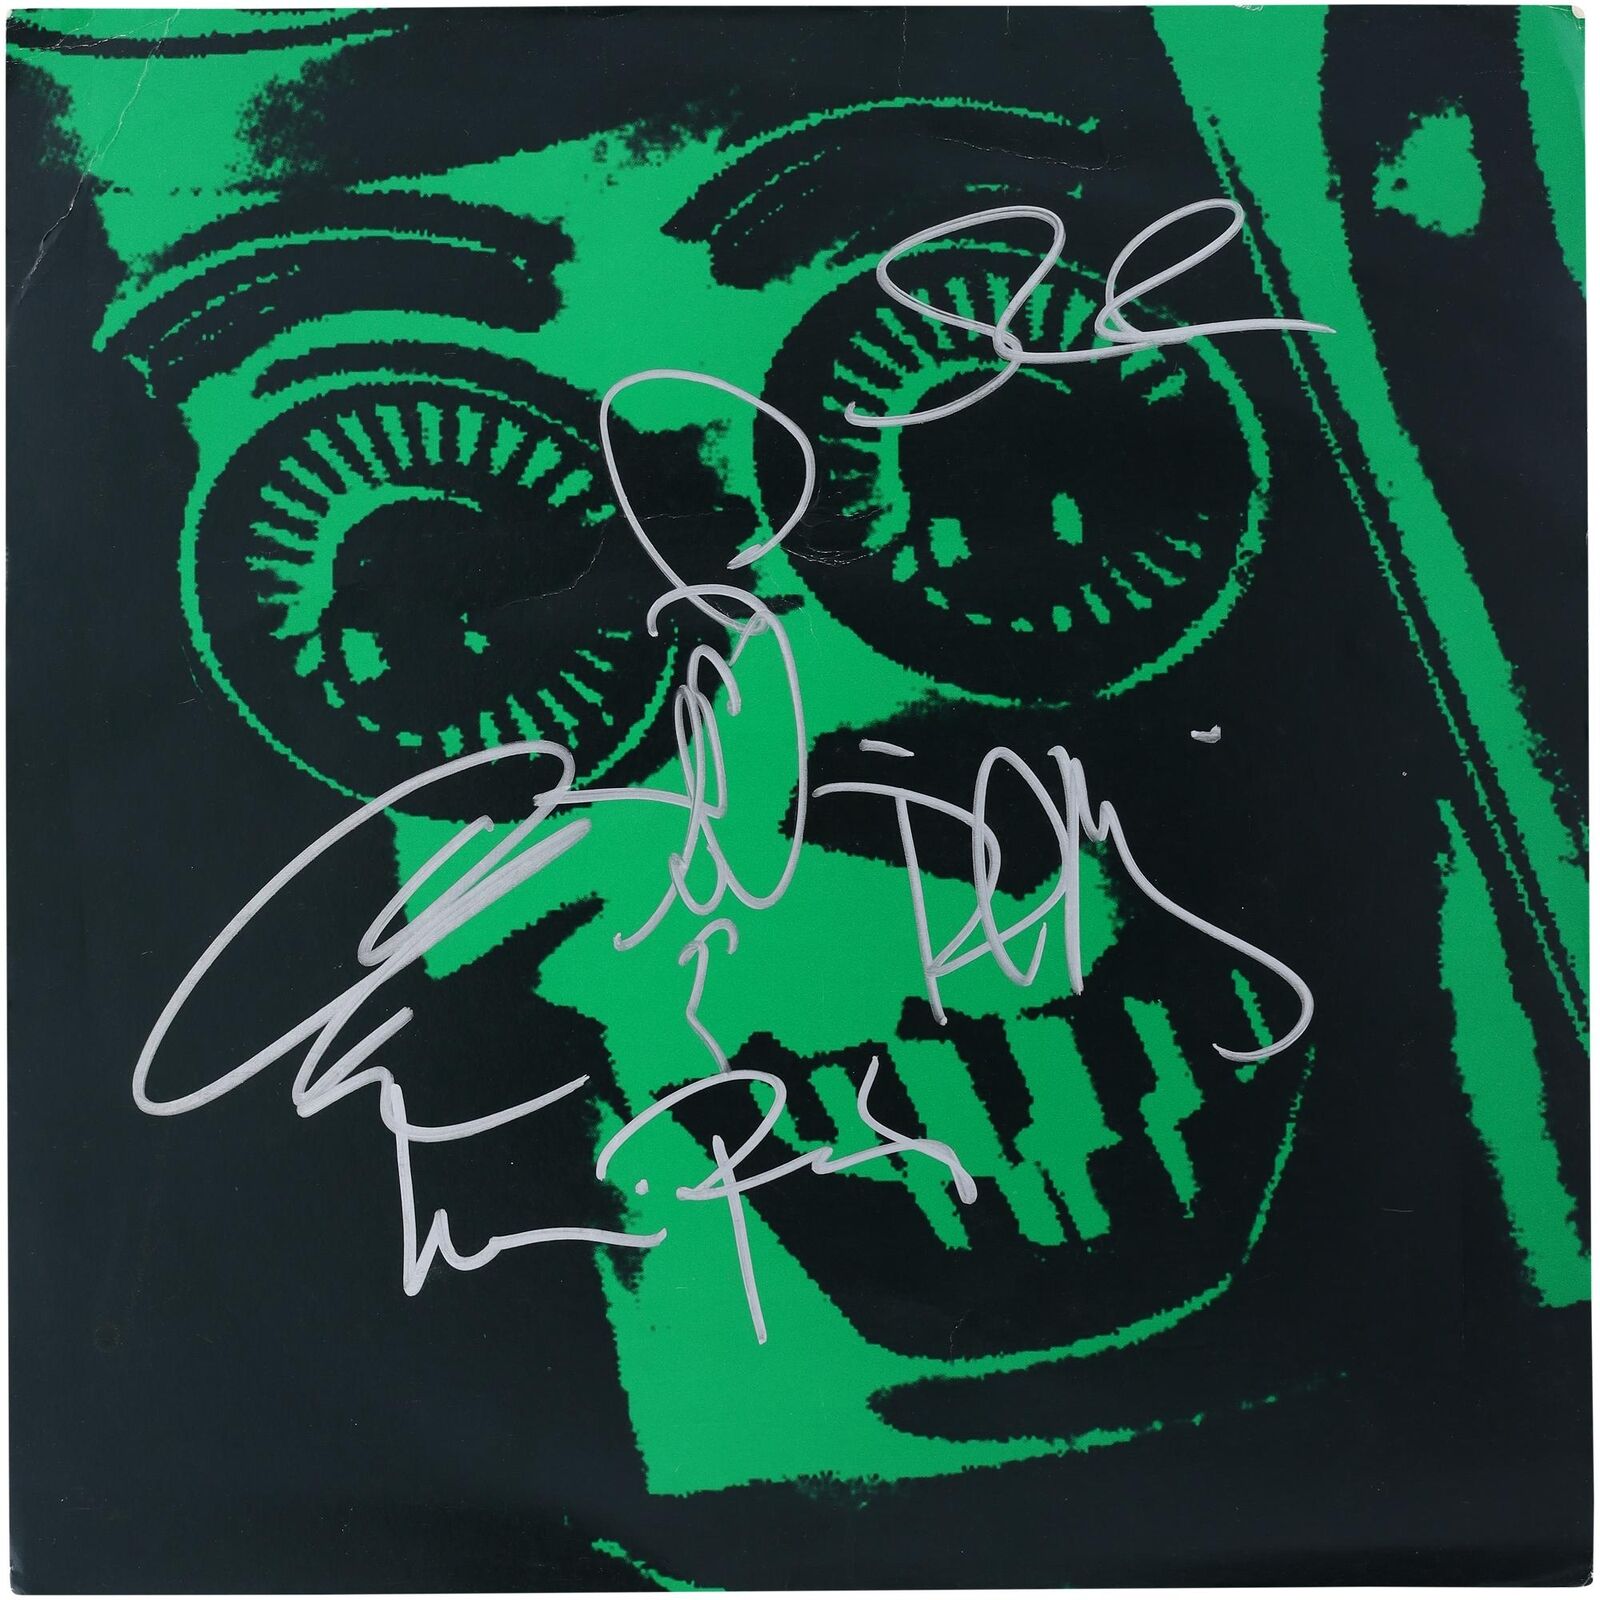 Los Lobos Autographed Colossal Head Album Cover with 5 Signatures BAS